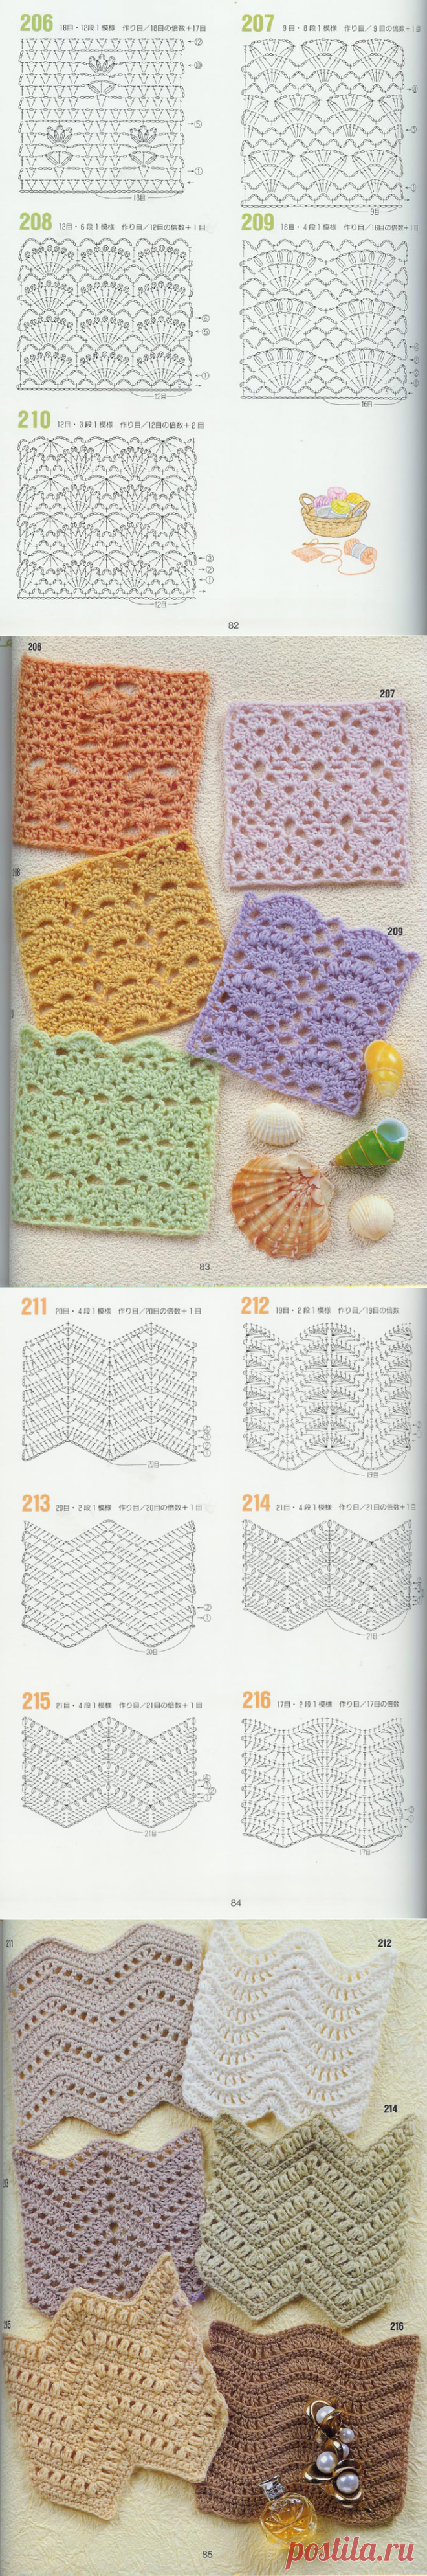 SOLO PUNTOS: Crochet puntos calados